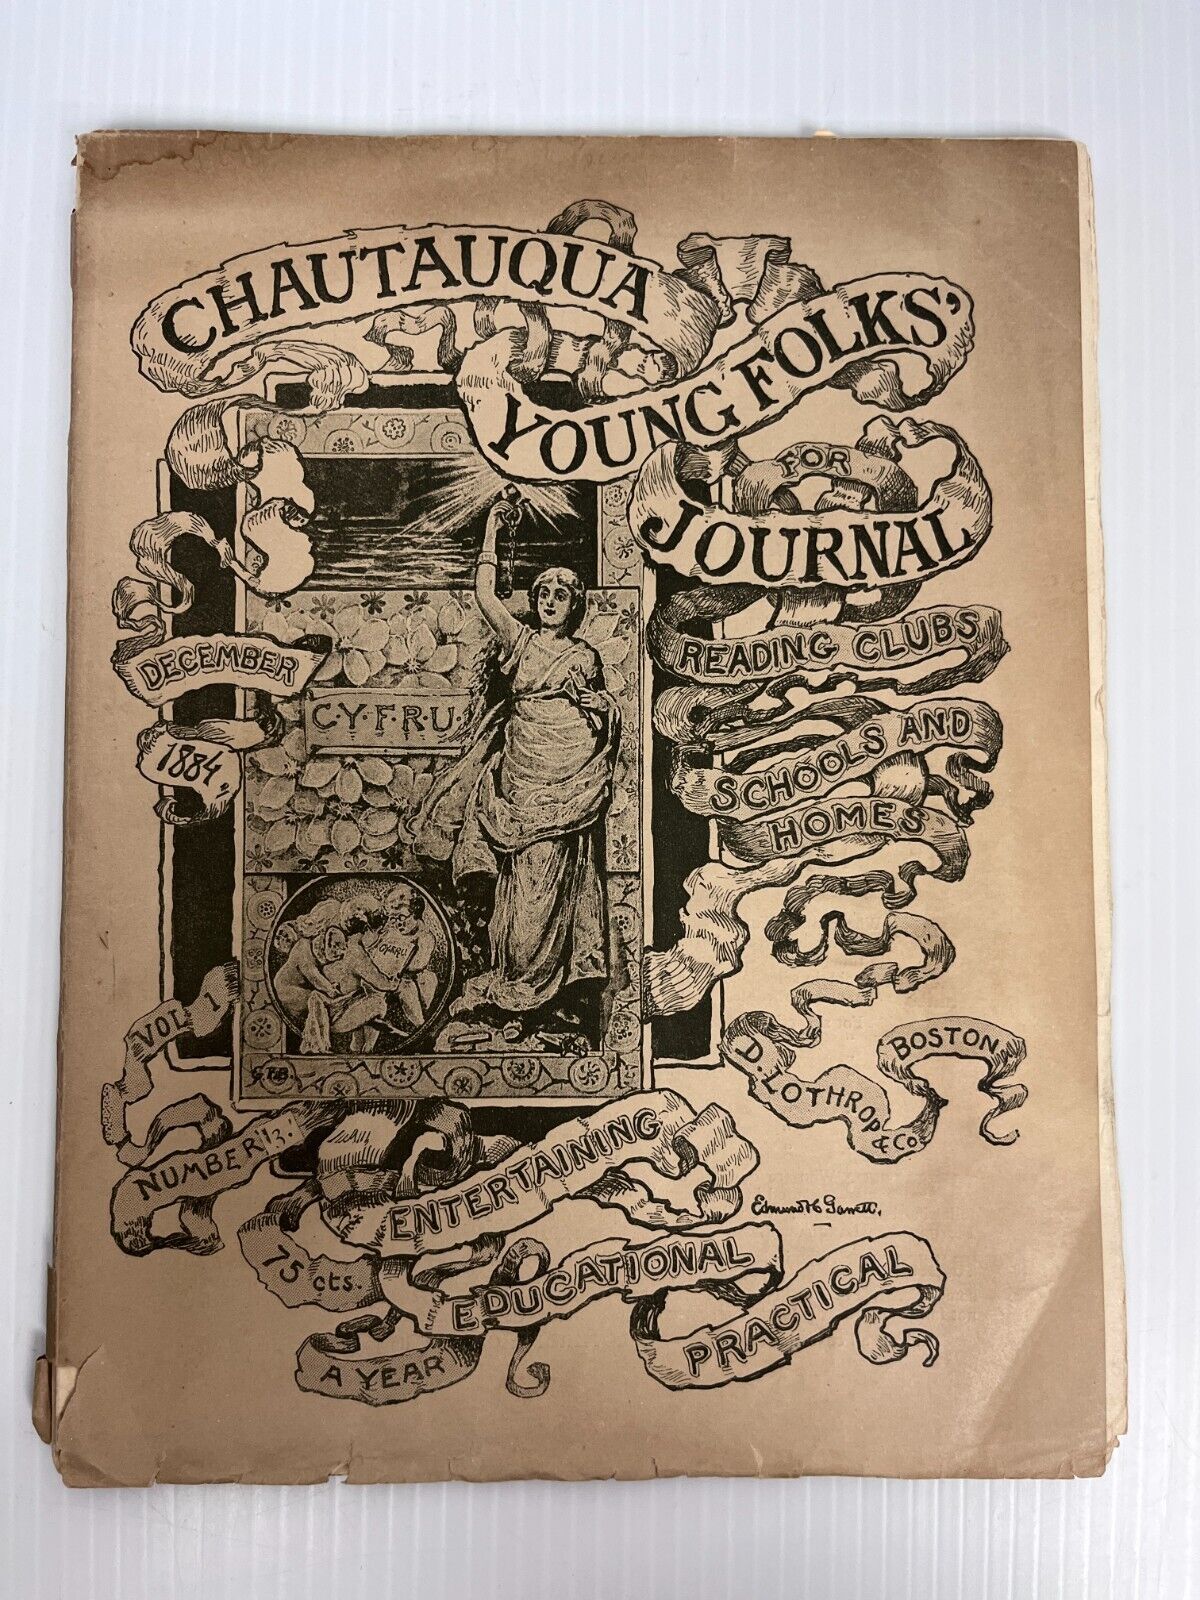 December 1884 - Chautauqua Young Folks Monthly Journal Instruction Vol 1, No. 13